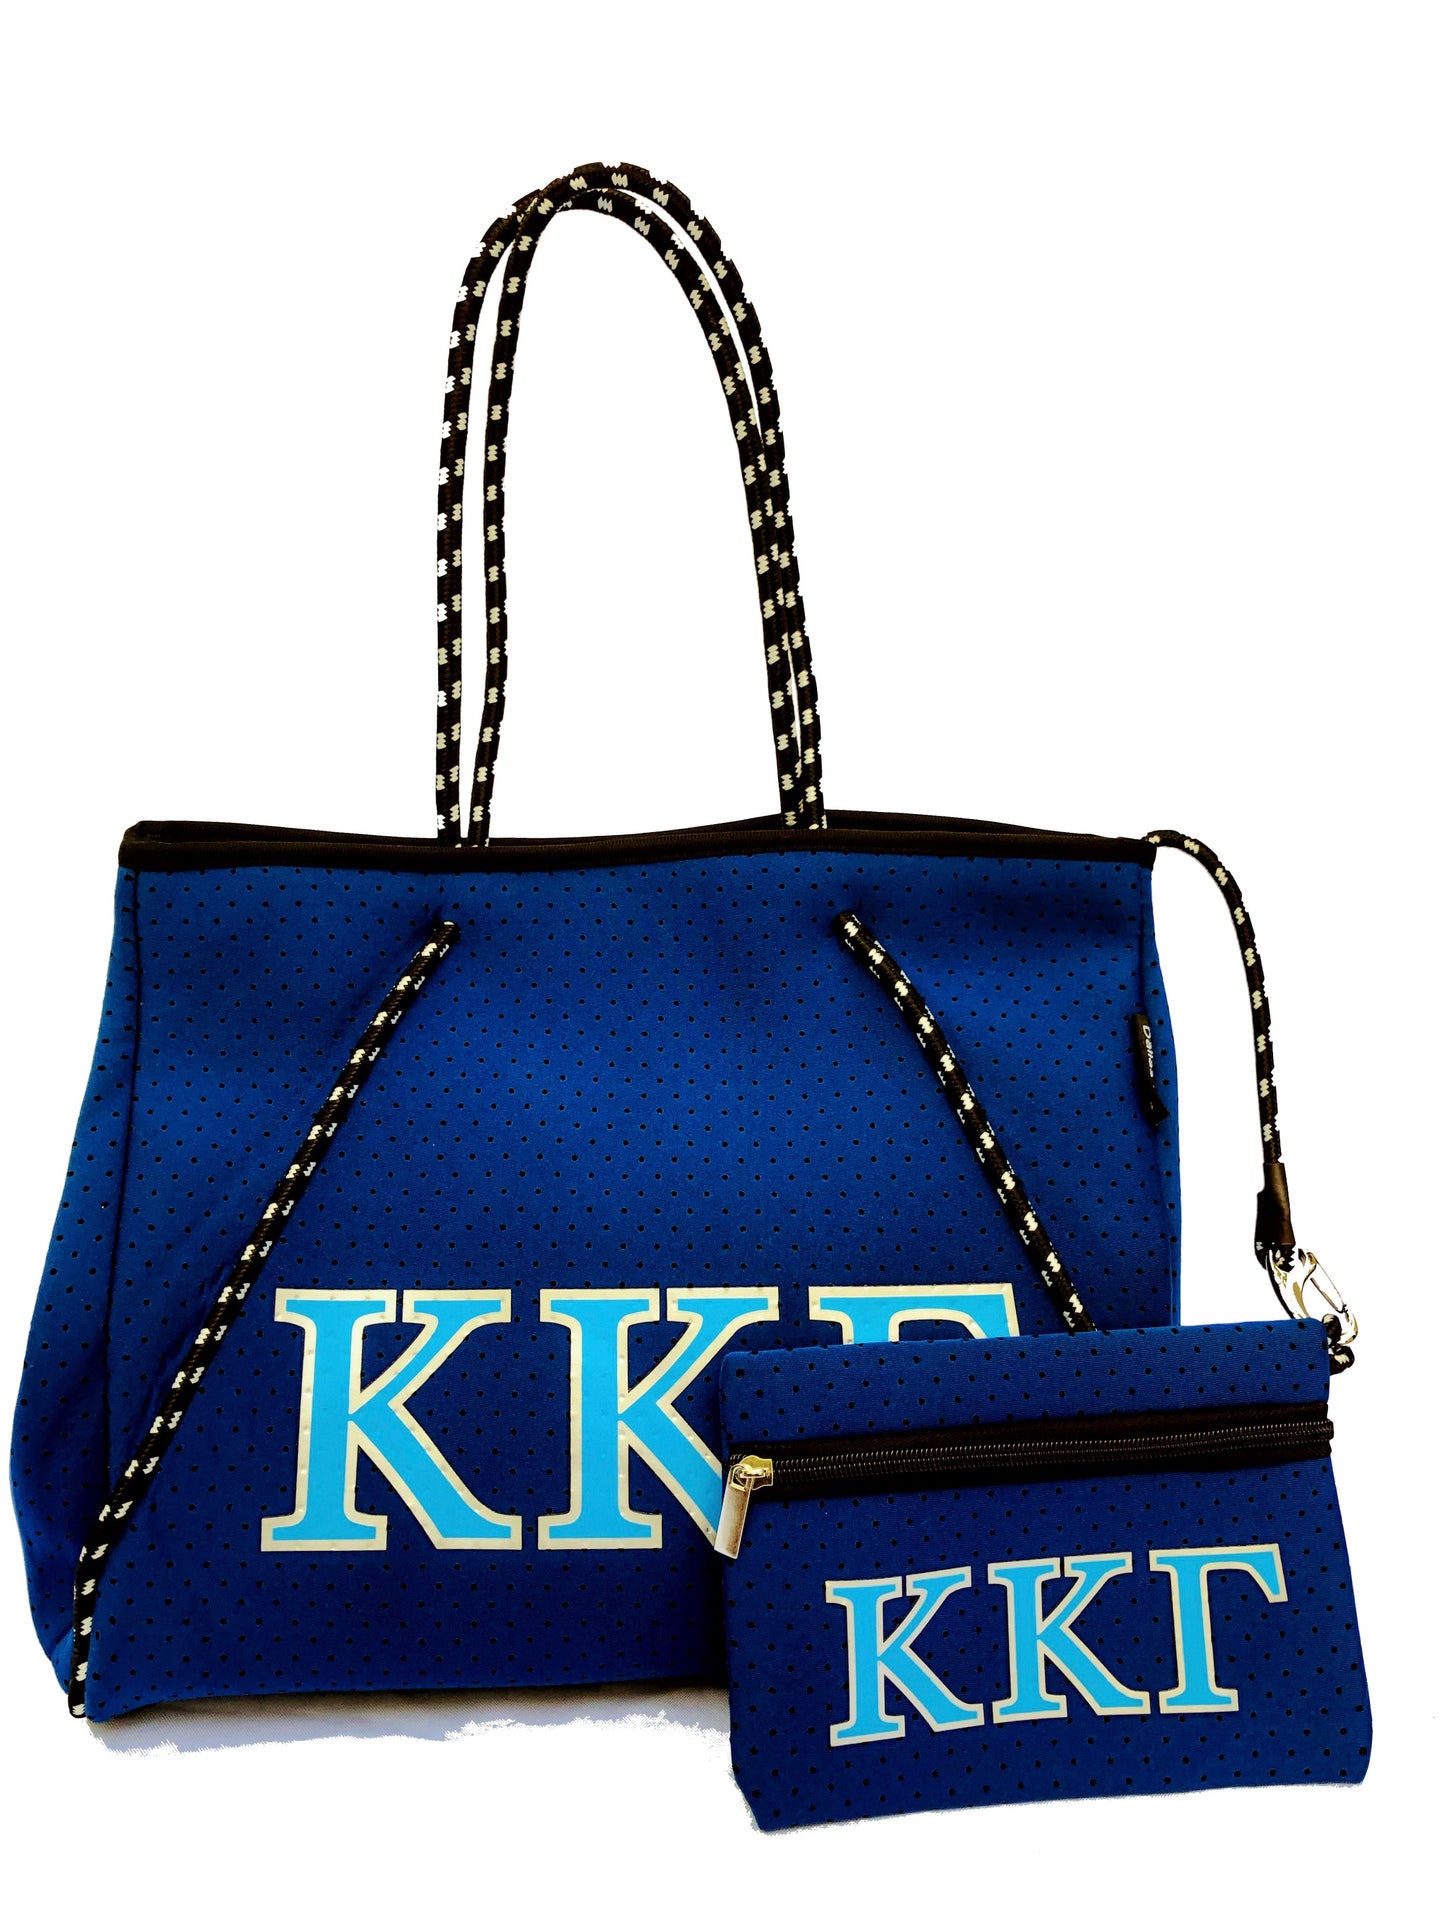 Kappa Kappa Gamma Sorority Gift Bid Day Recruitment Neoprene Tote Bags School Overnight Gym Travel Beach Sister Dallas Hill